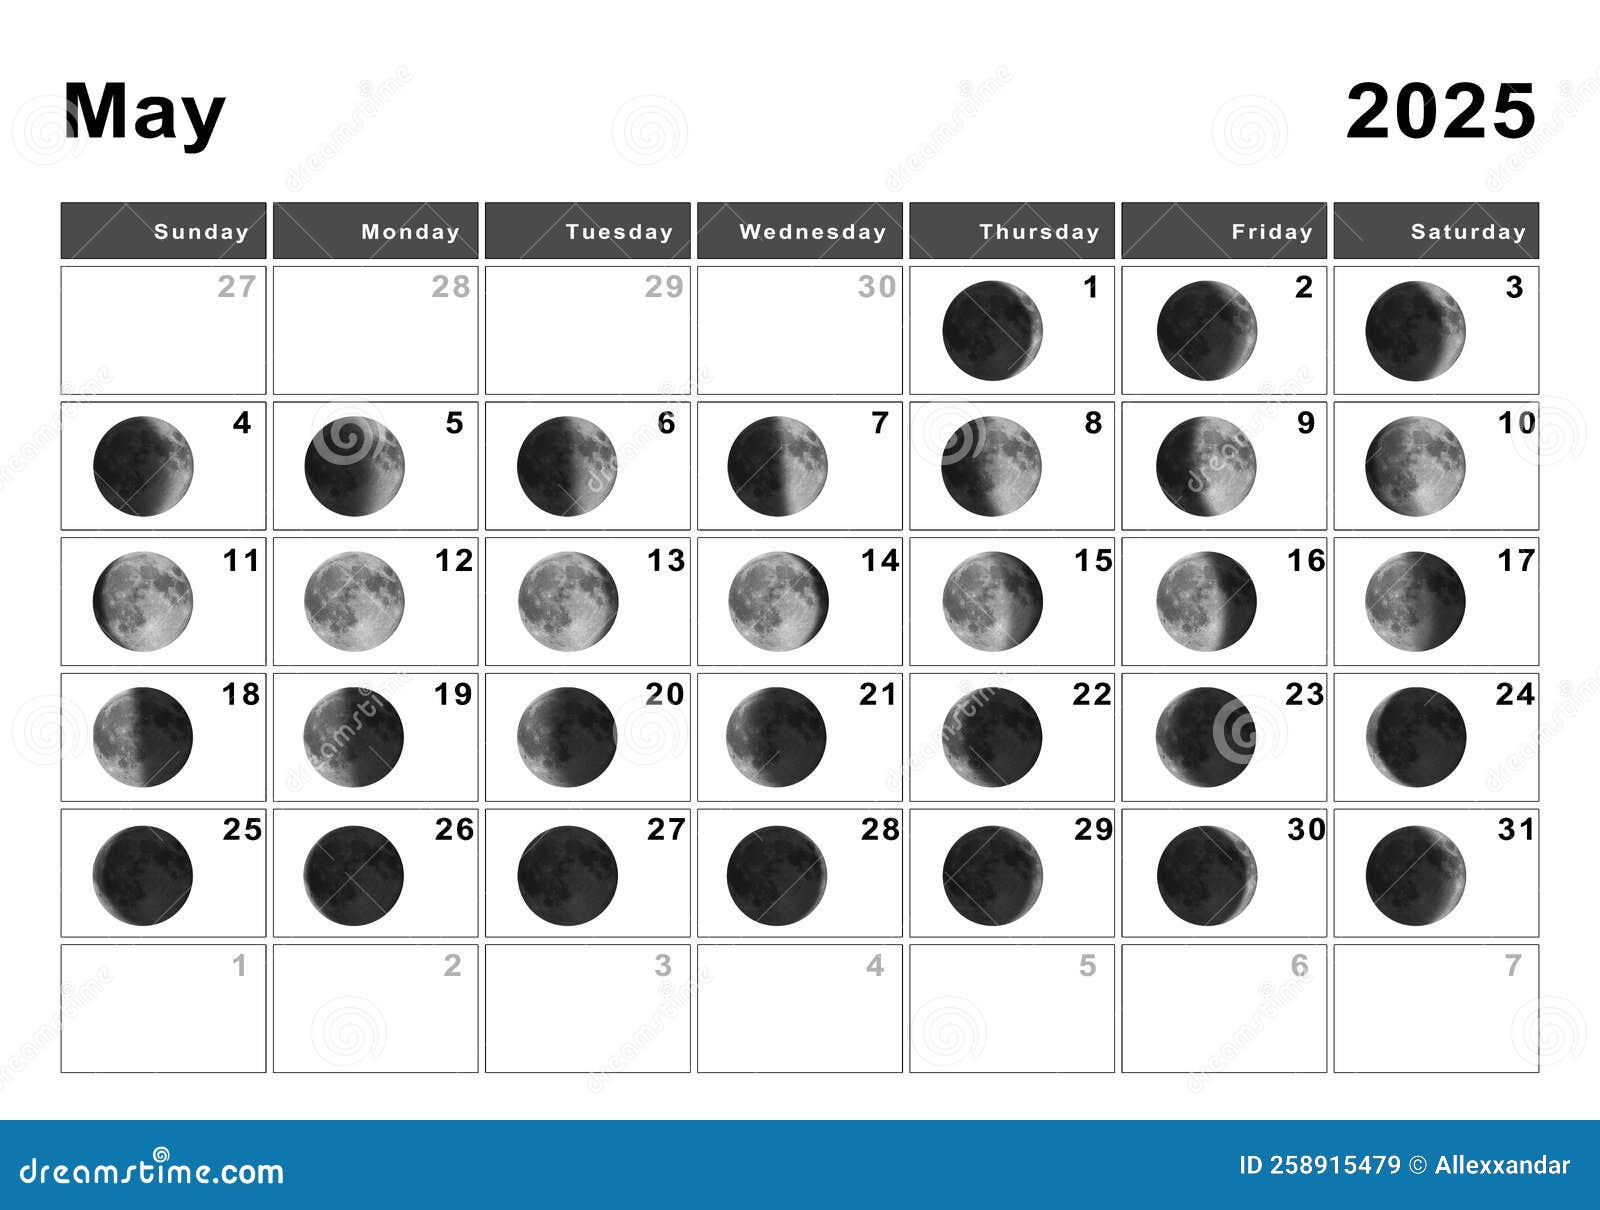 premium-photo-march-2025-lunar-calendar-moon-cycles-moon-phases